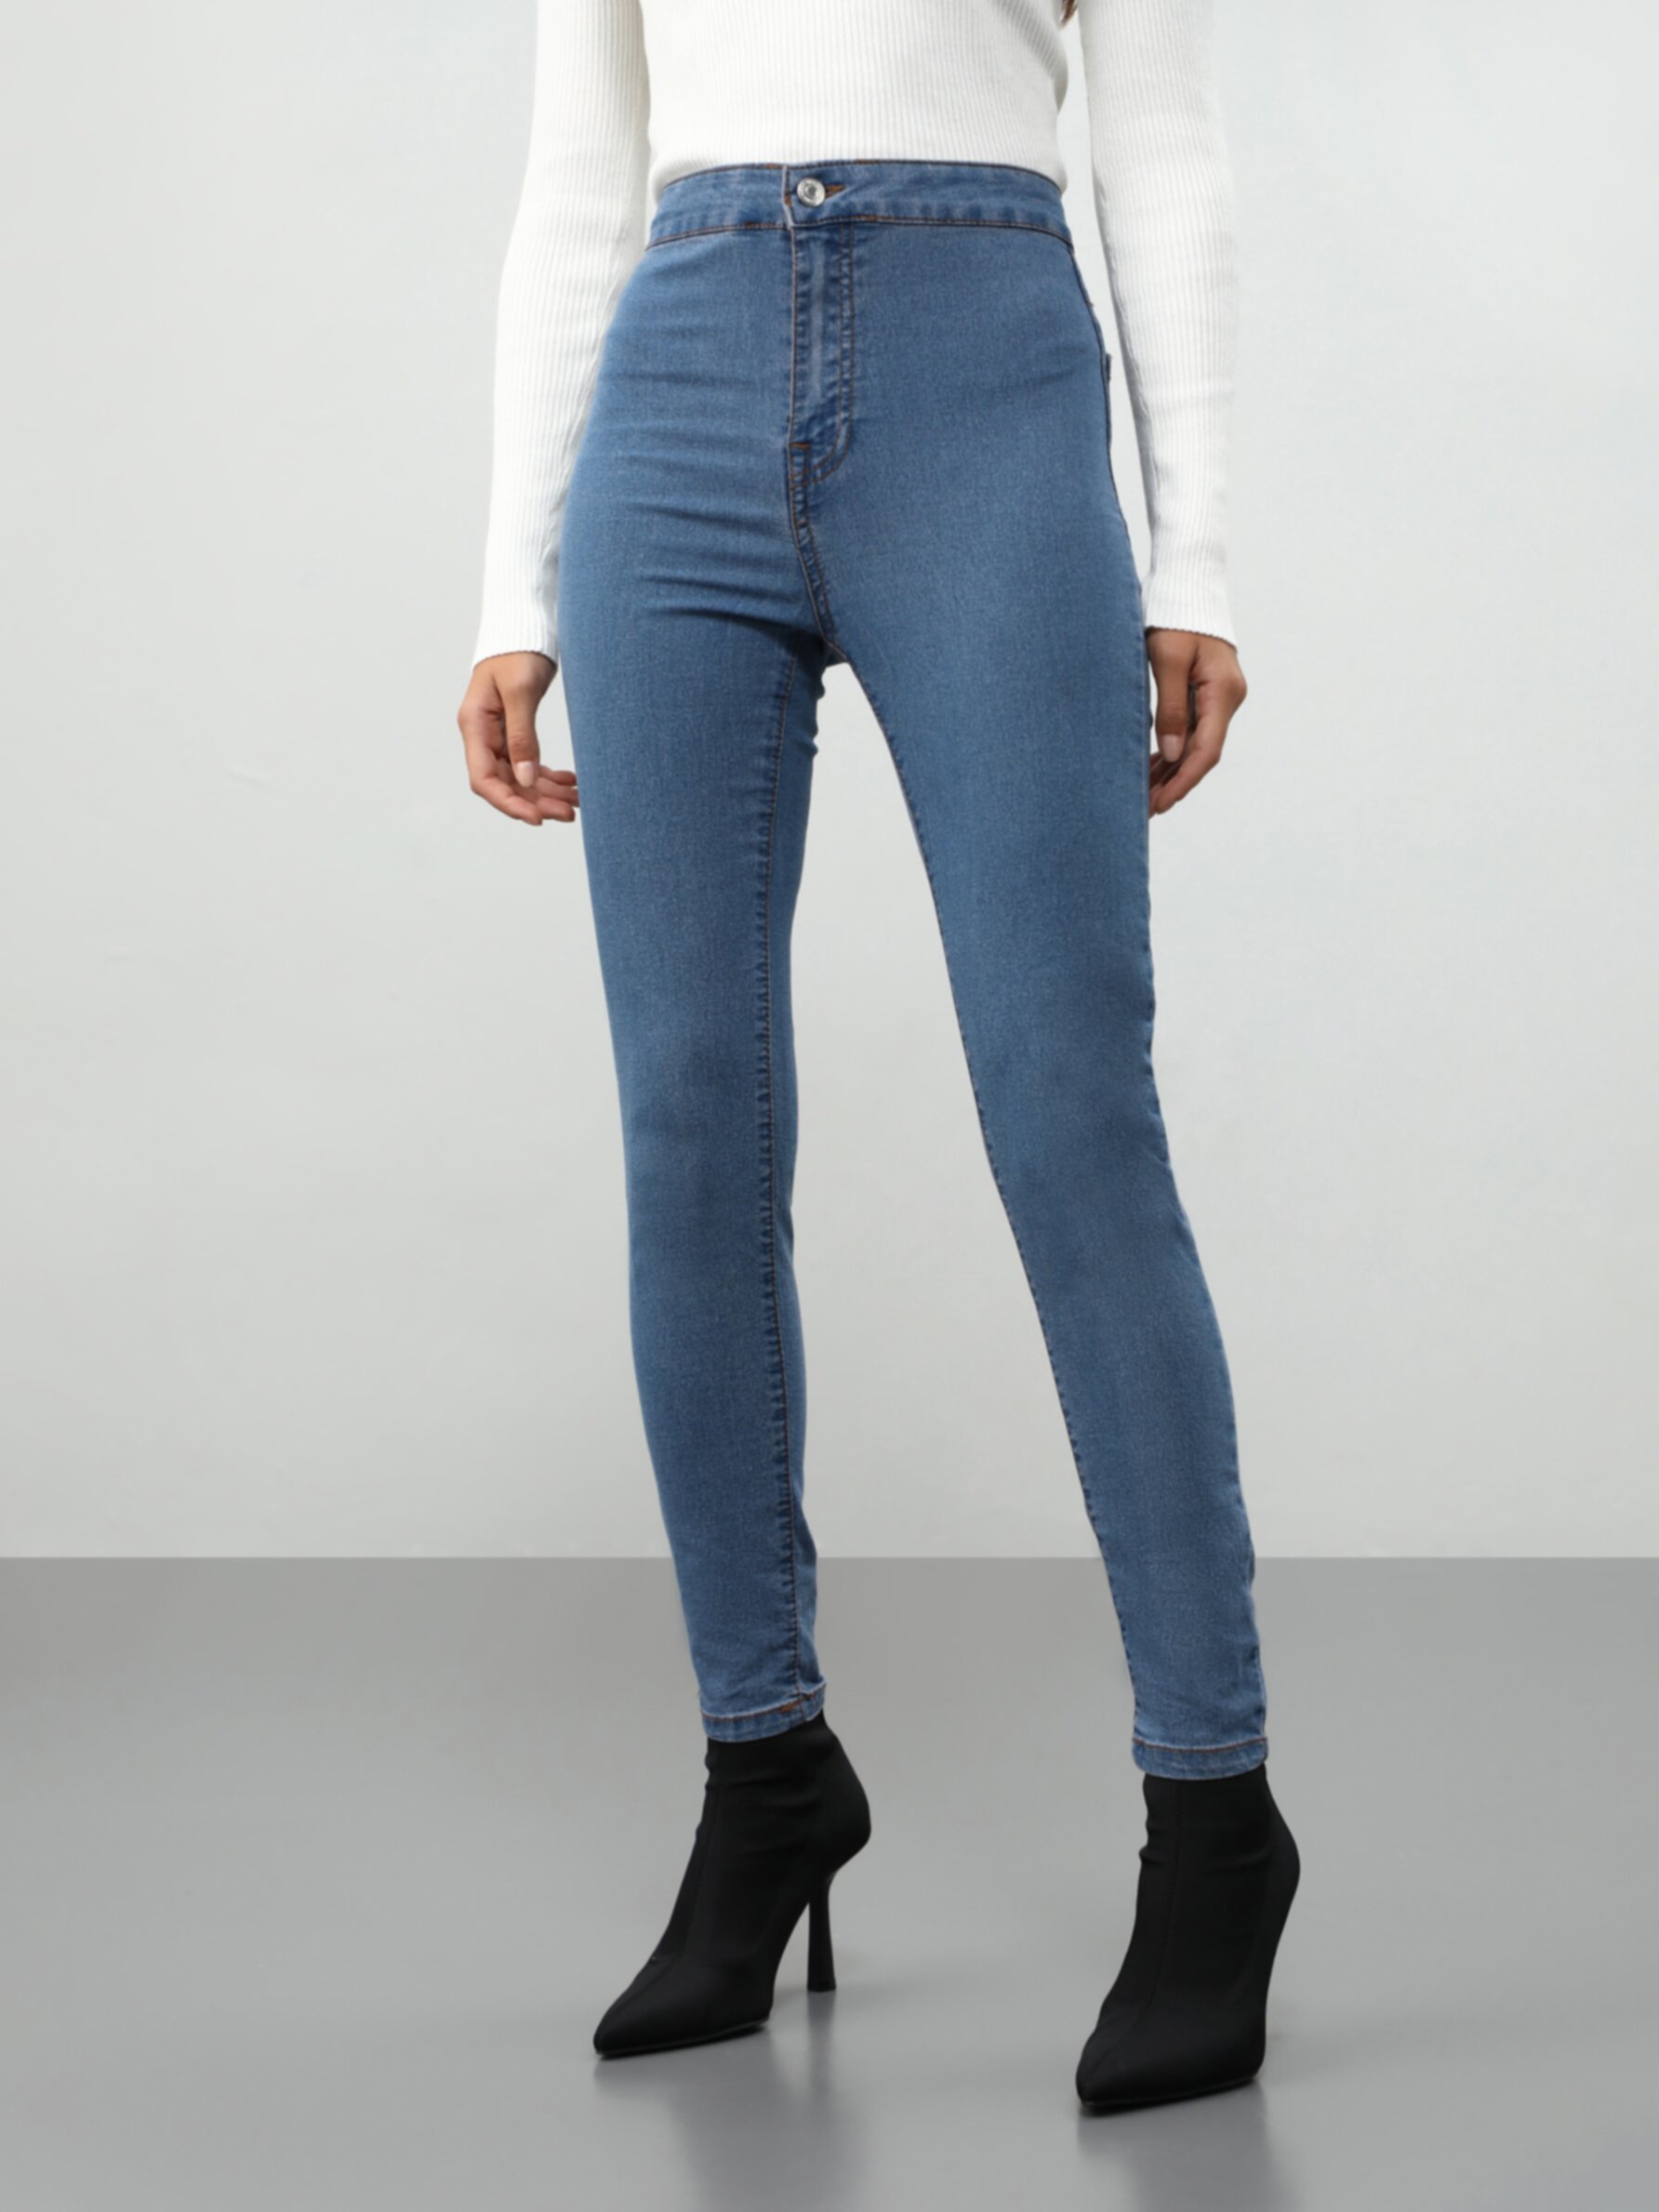 Rabatt 64 % Gelb 38 DAMEN Jeans NO STYLE Lefties Jegging & Skinny & Slim 